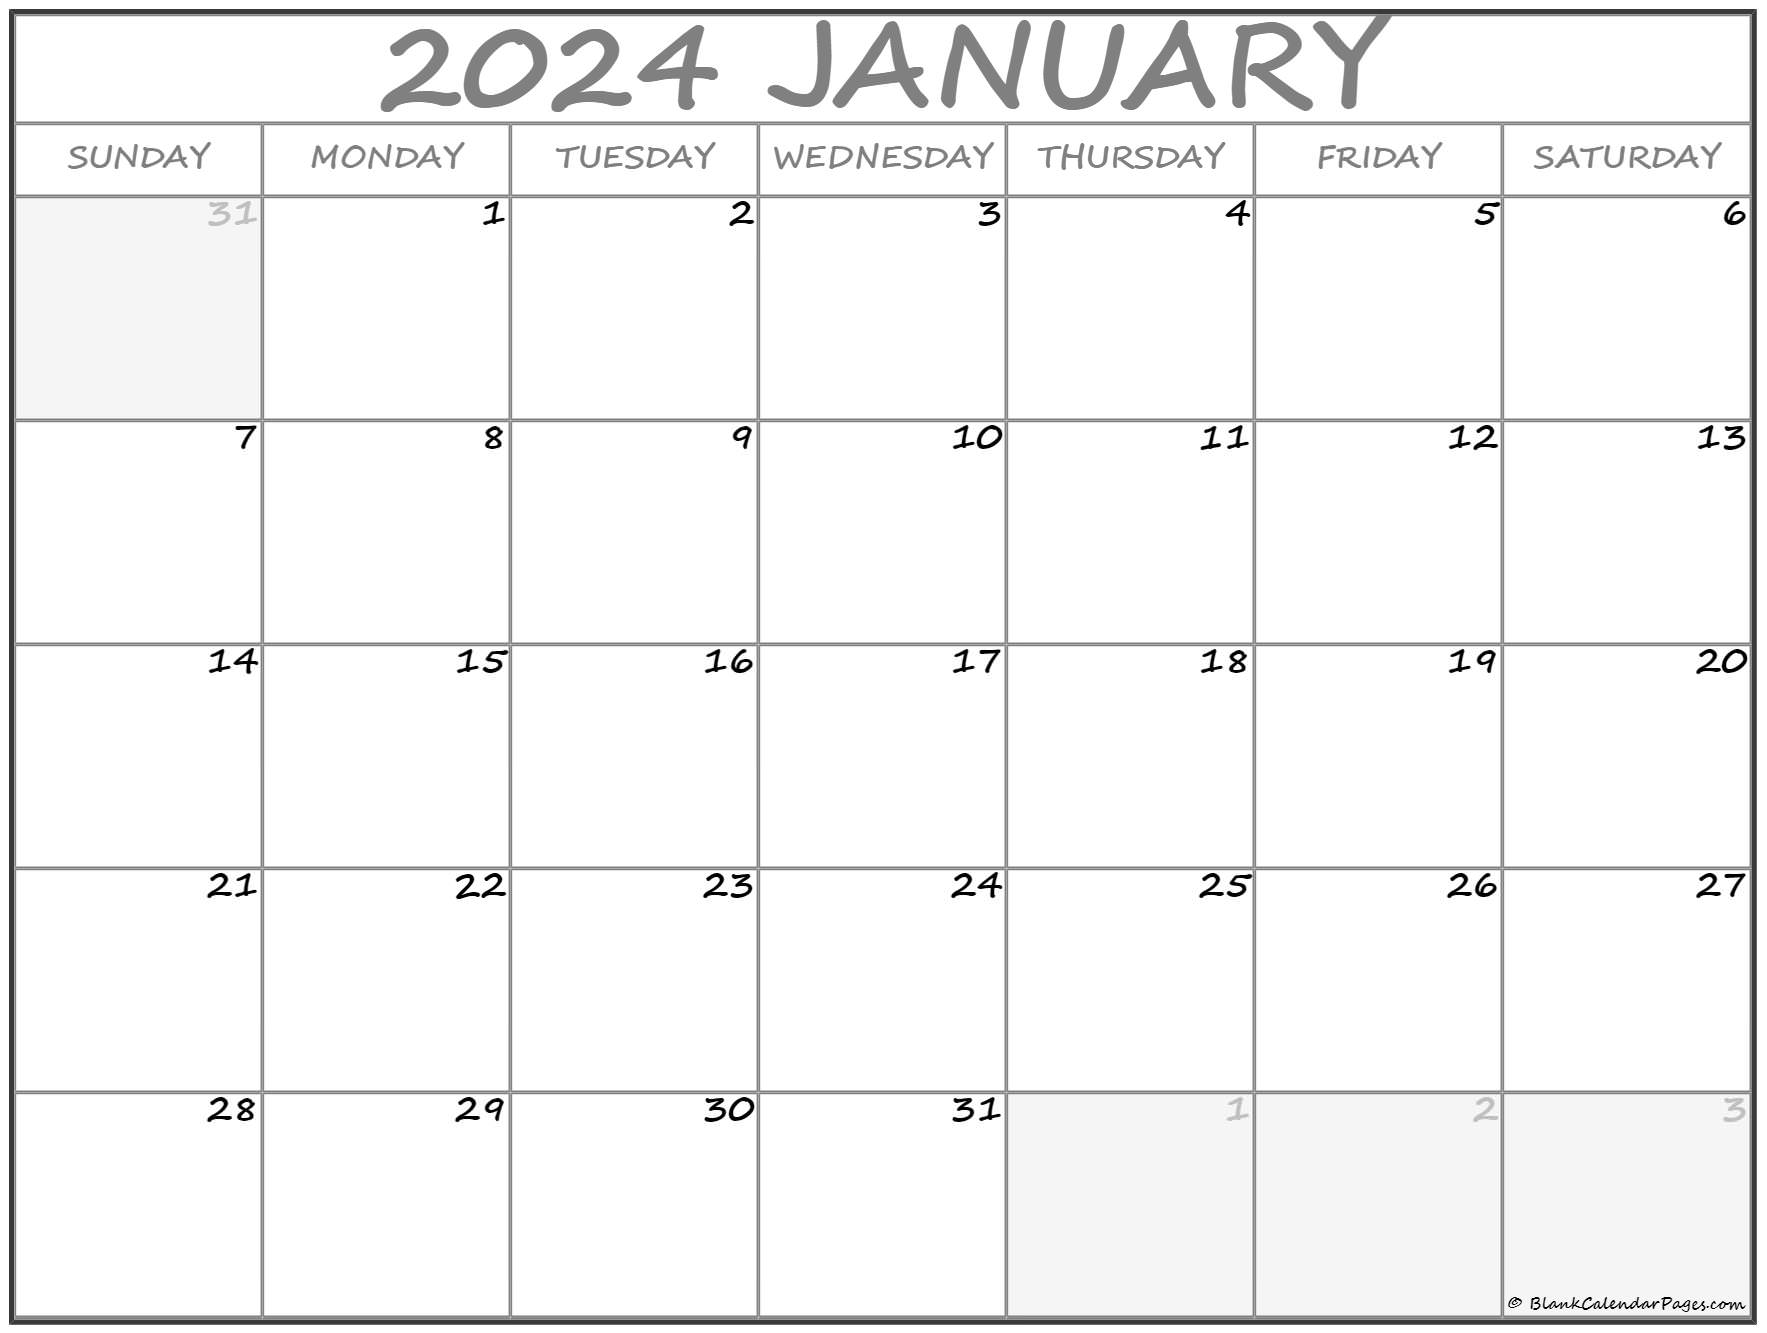 Https Www Free Printable Calendar Com January 2024